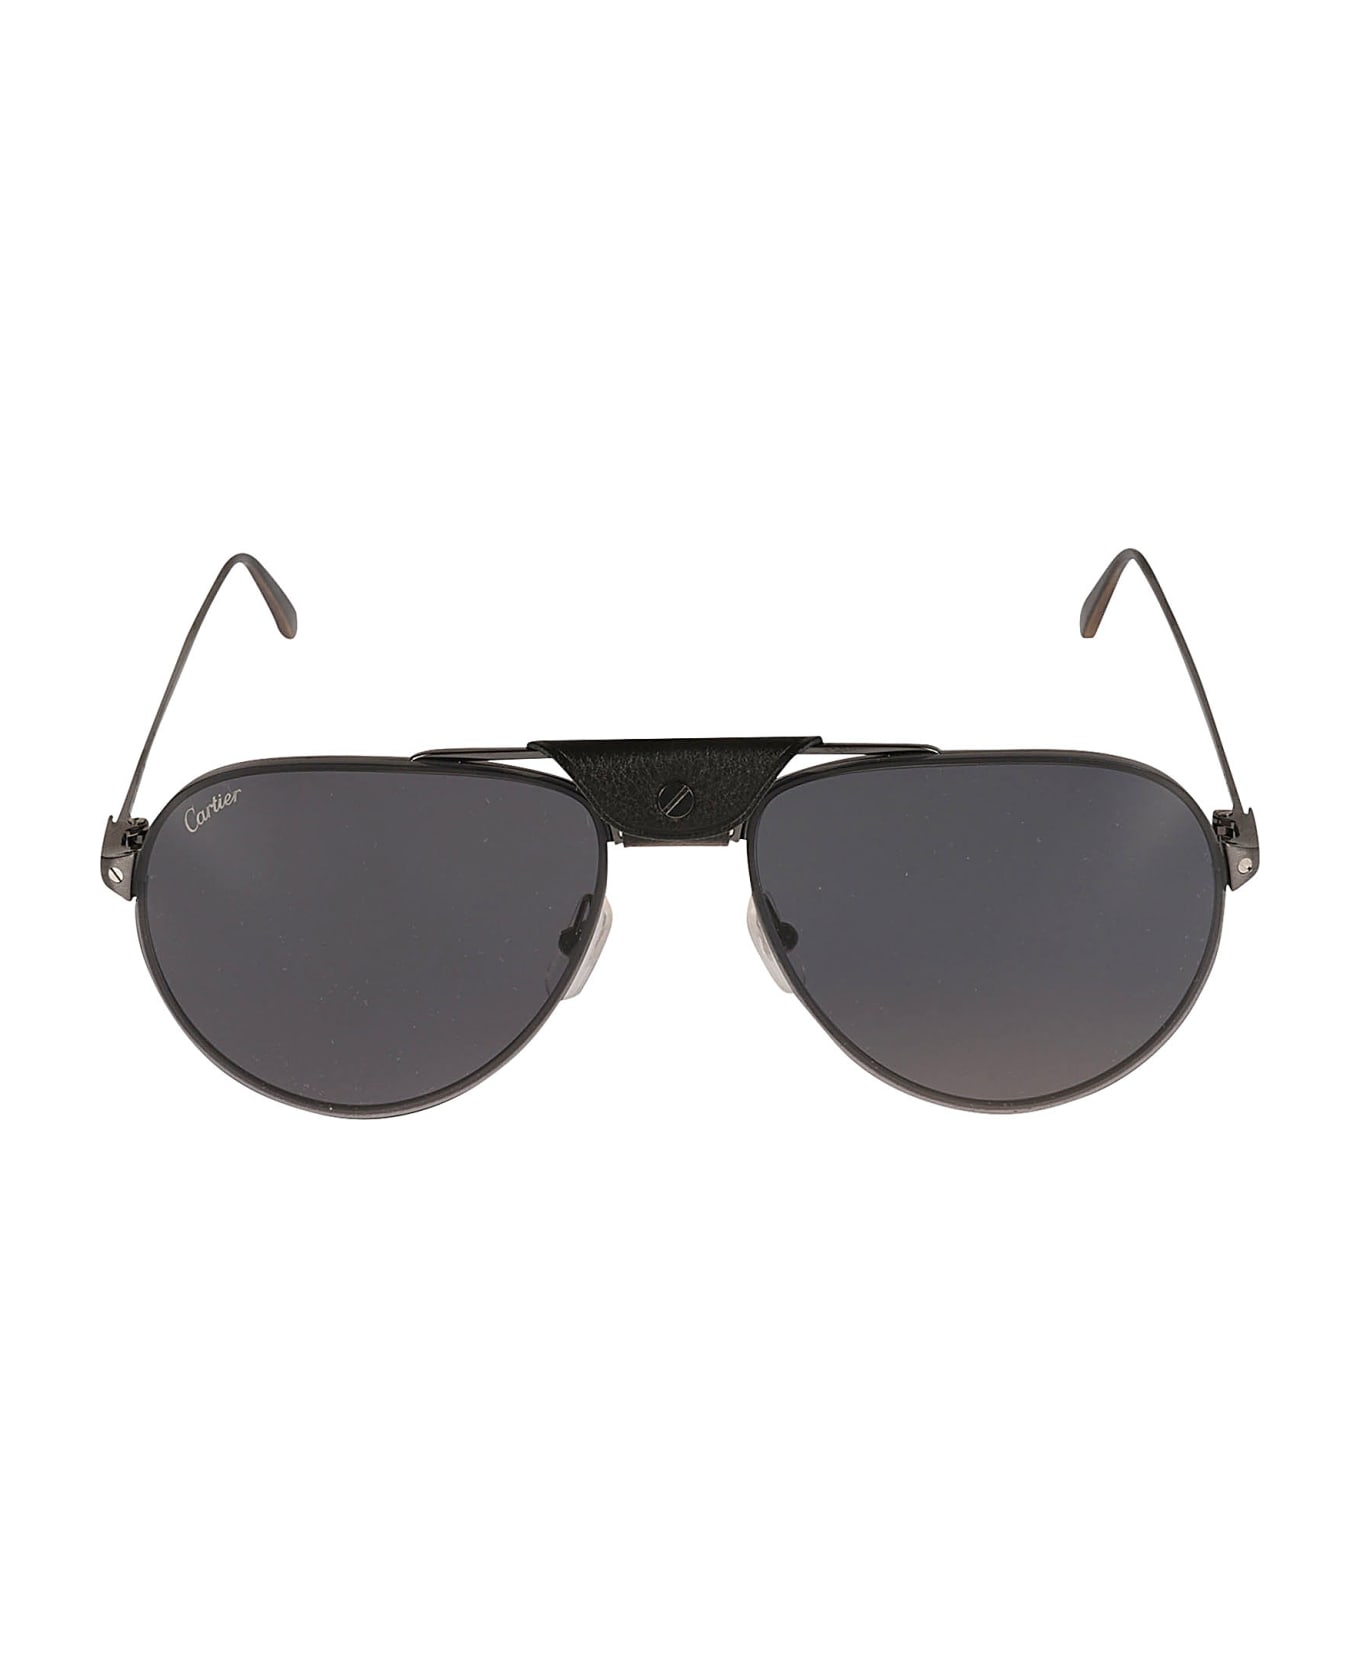 Cartier Eyewear Logo Aviator Sunglasses - 001 Va4098 Havana Sunglasses